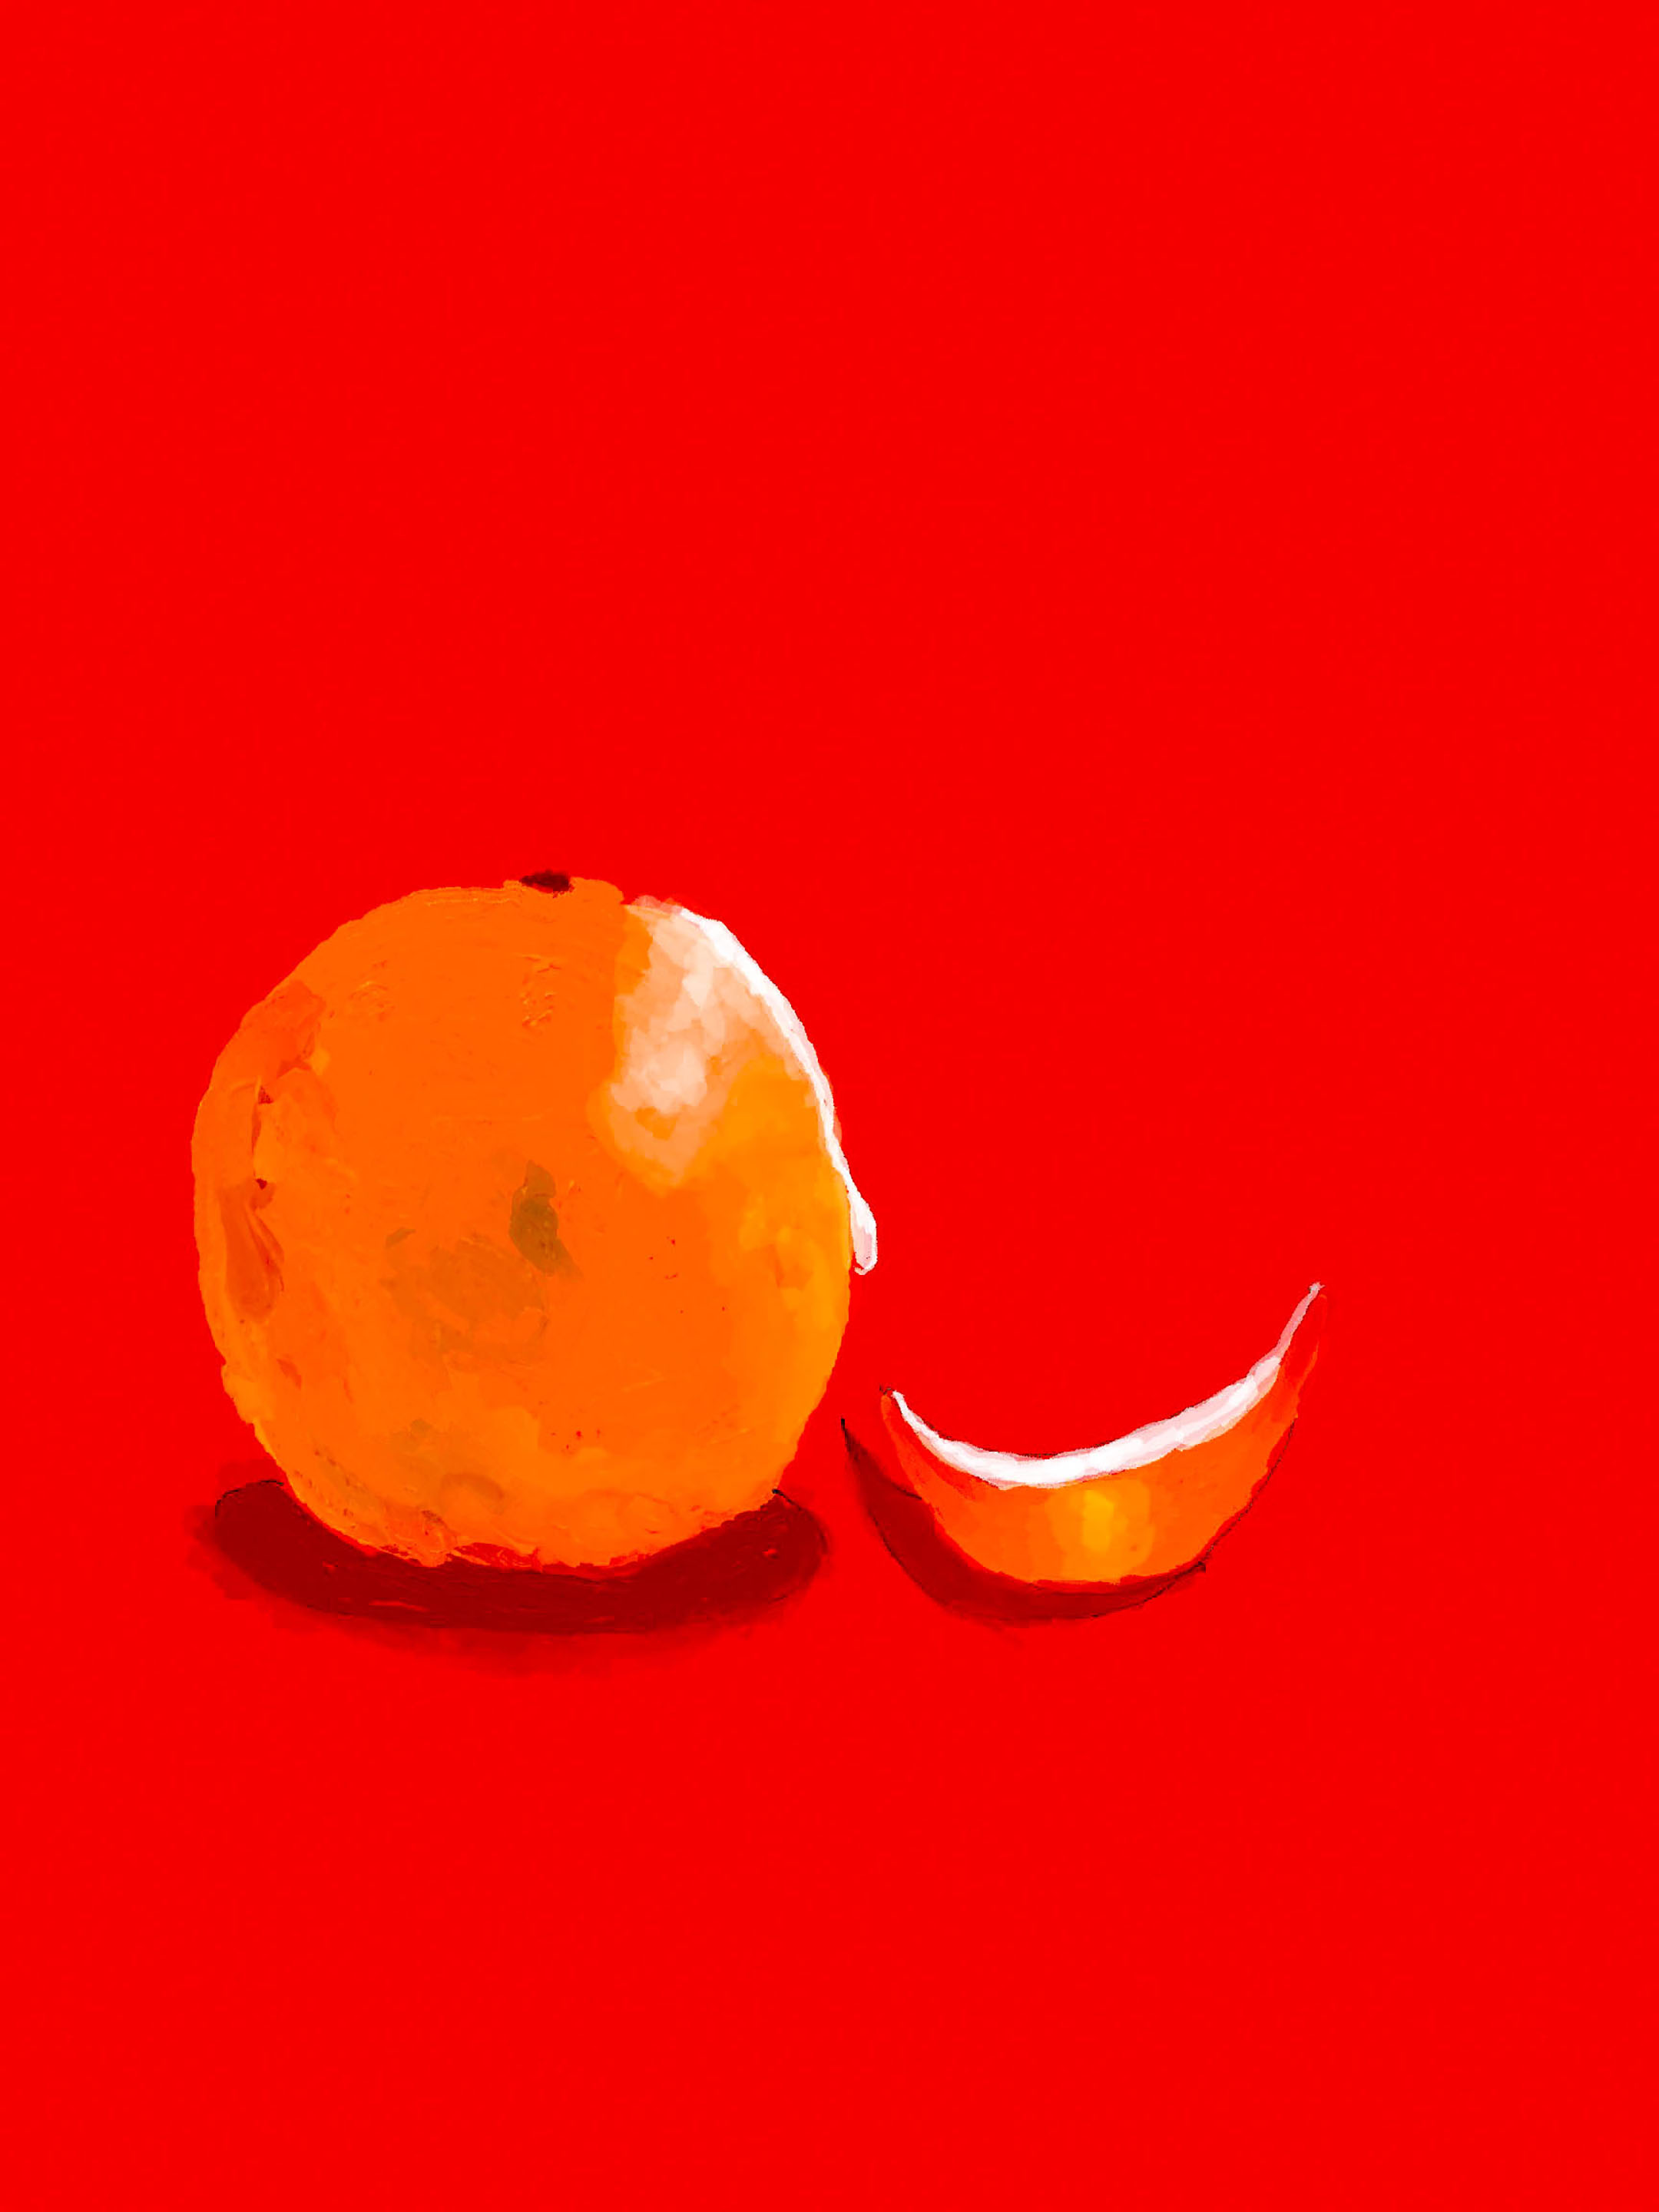 Still Life with Orange